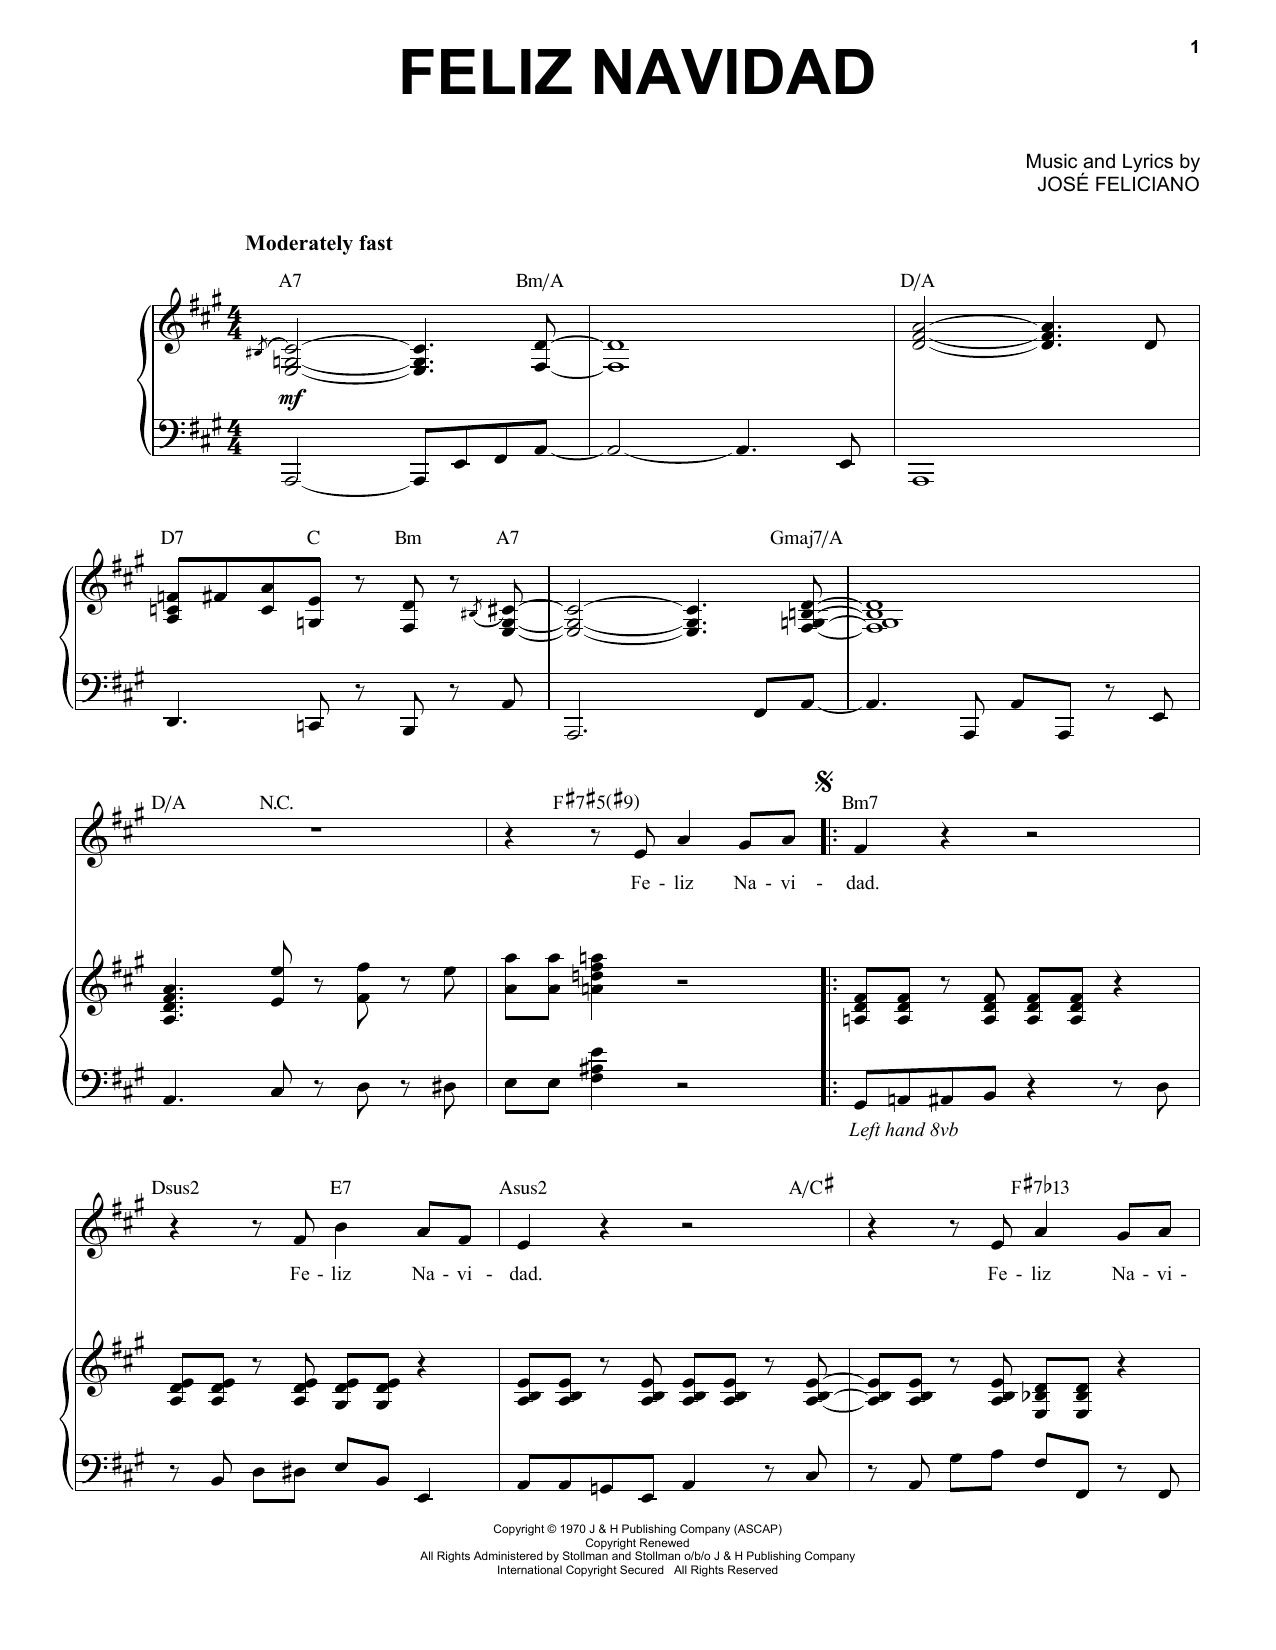 Jose Feliciano Feliz Navidad Sheet Music Notes & Chords for Piano & Vocal - Download or Print PDF